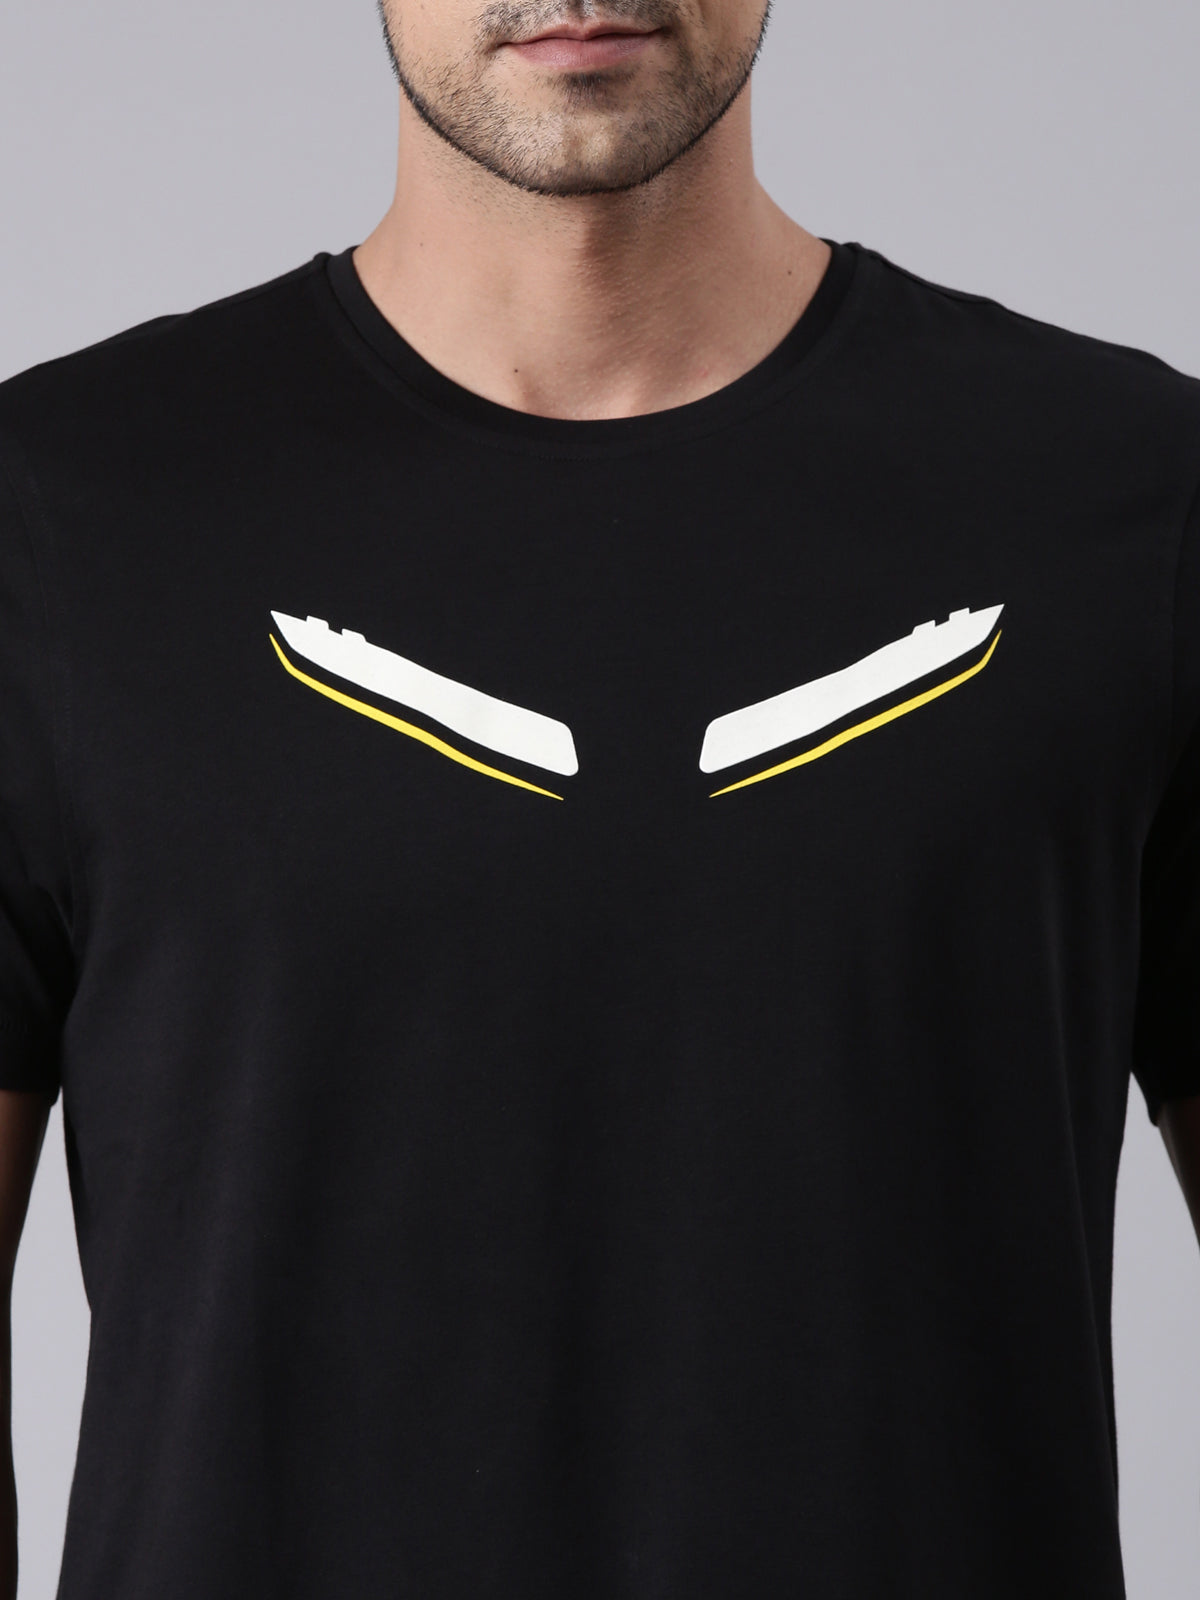  TVS Racing Dynamic LED Crew neck T Shirt